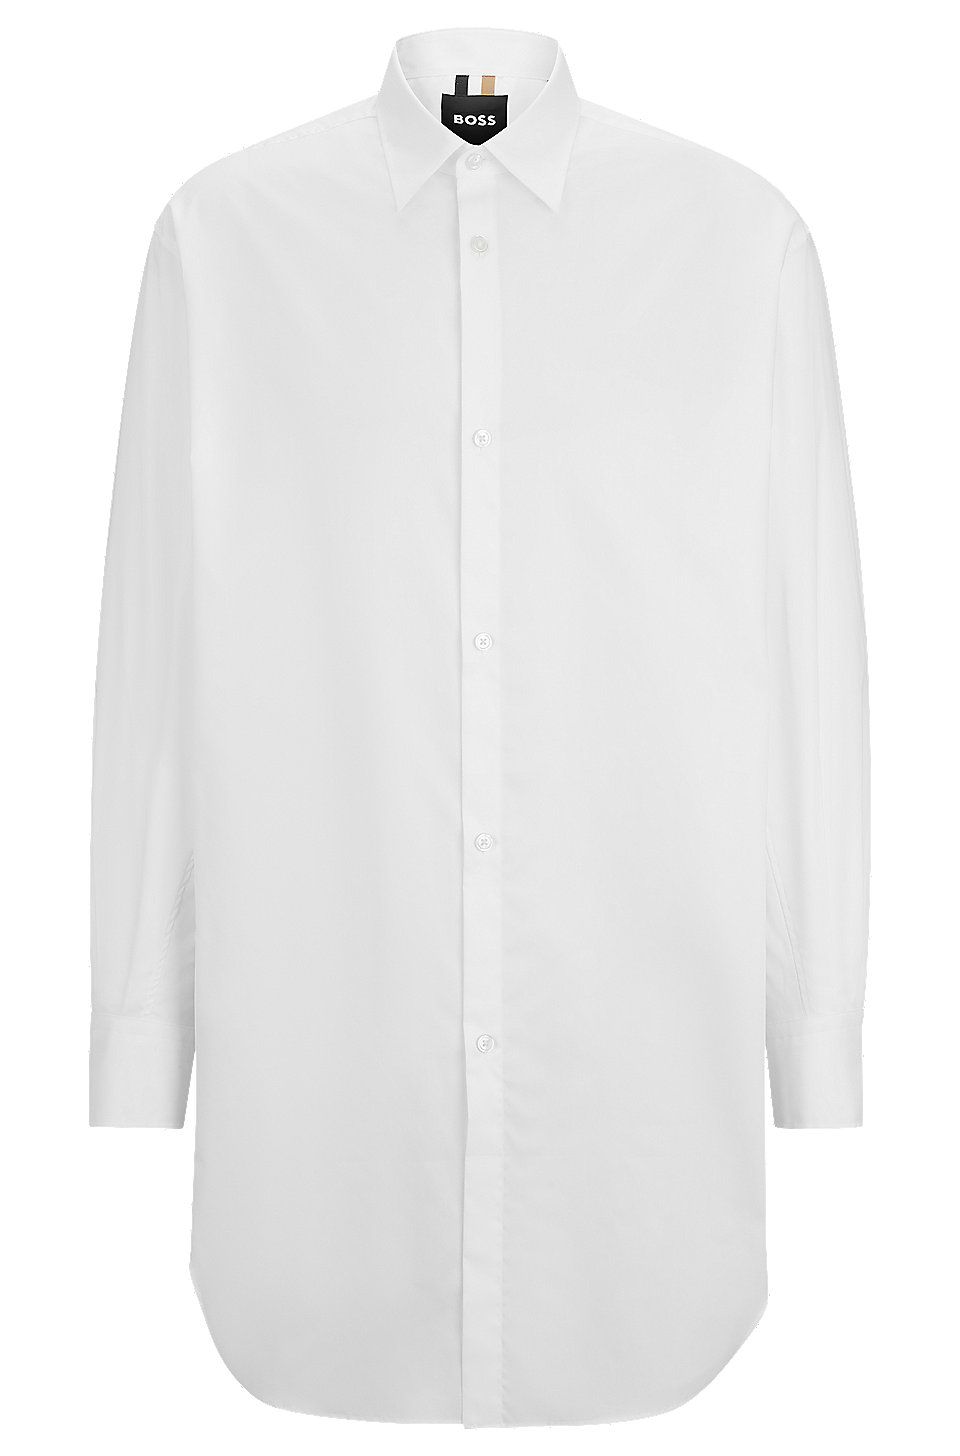 easy-iron in poplin - BOSS shirt Longline regular-fit cotton